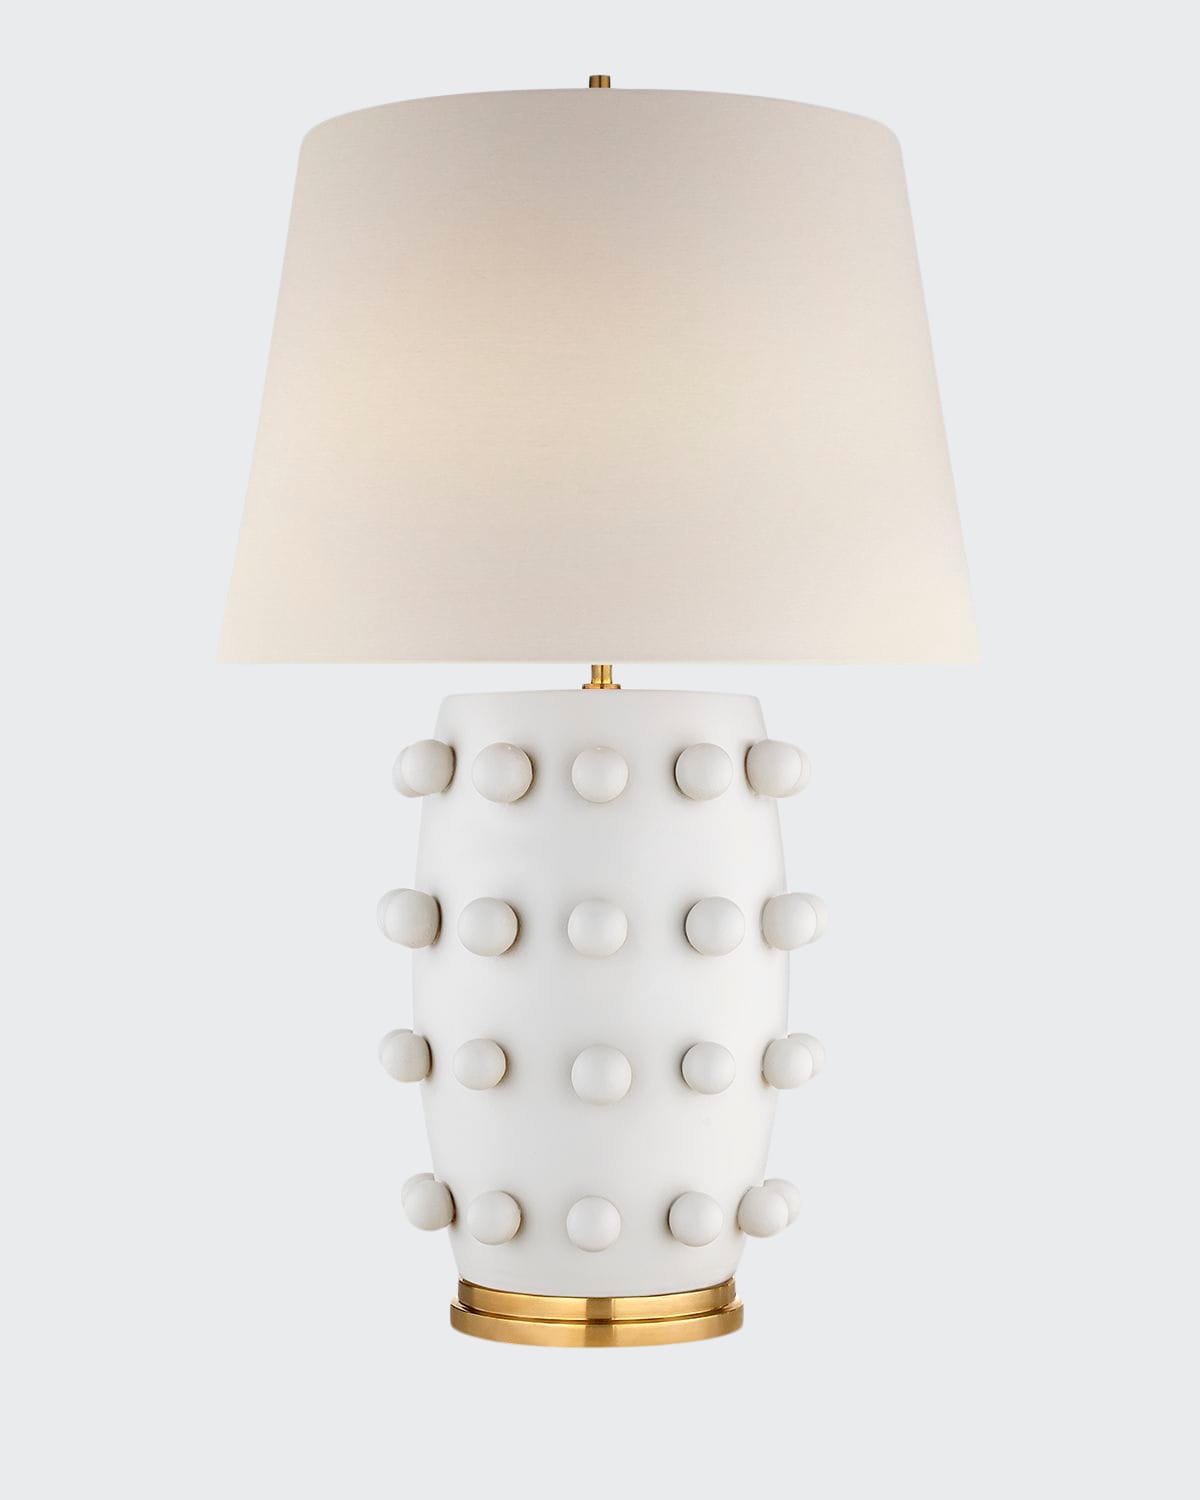 Kelly Wearstler For Visual Comfort Signature Linden Medium Lamp In Plaster White